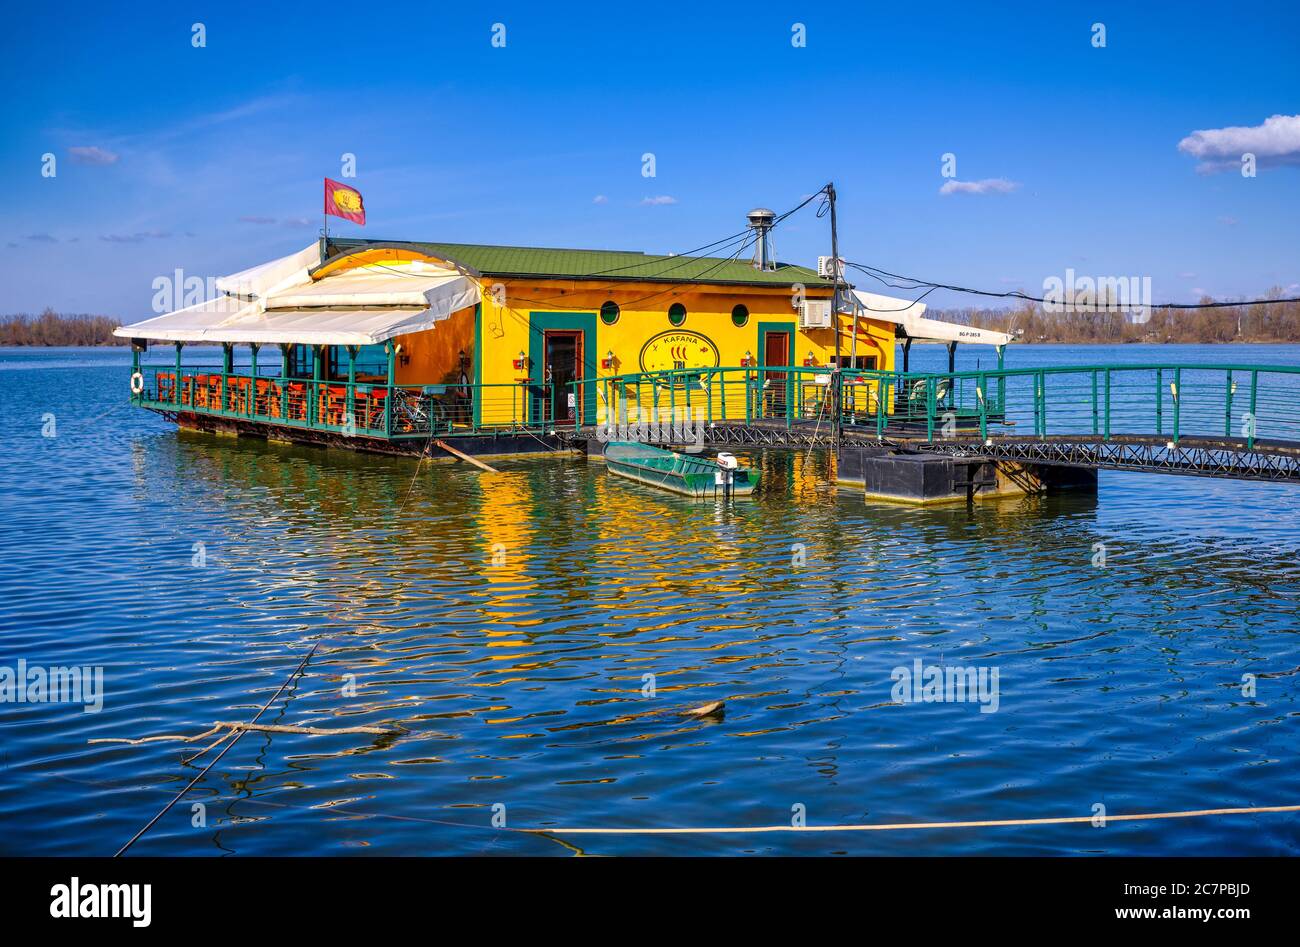 Belgrade / Serbia - February 22, 2020: River raft restaurant and bar on the Danube river in Belgrade, Serbia Stock Photo